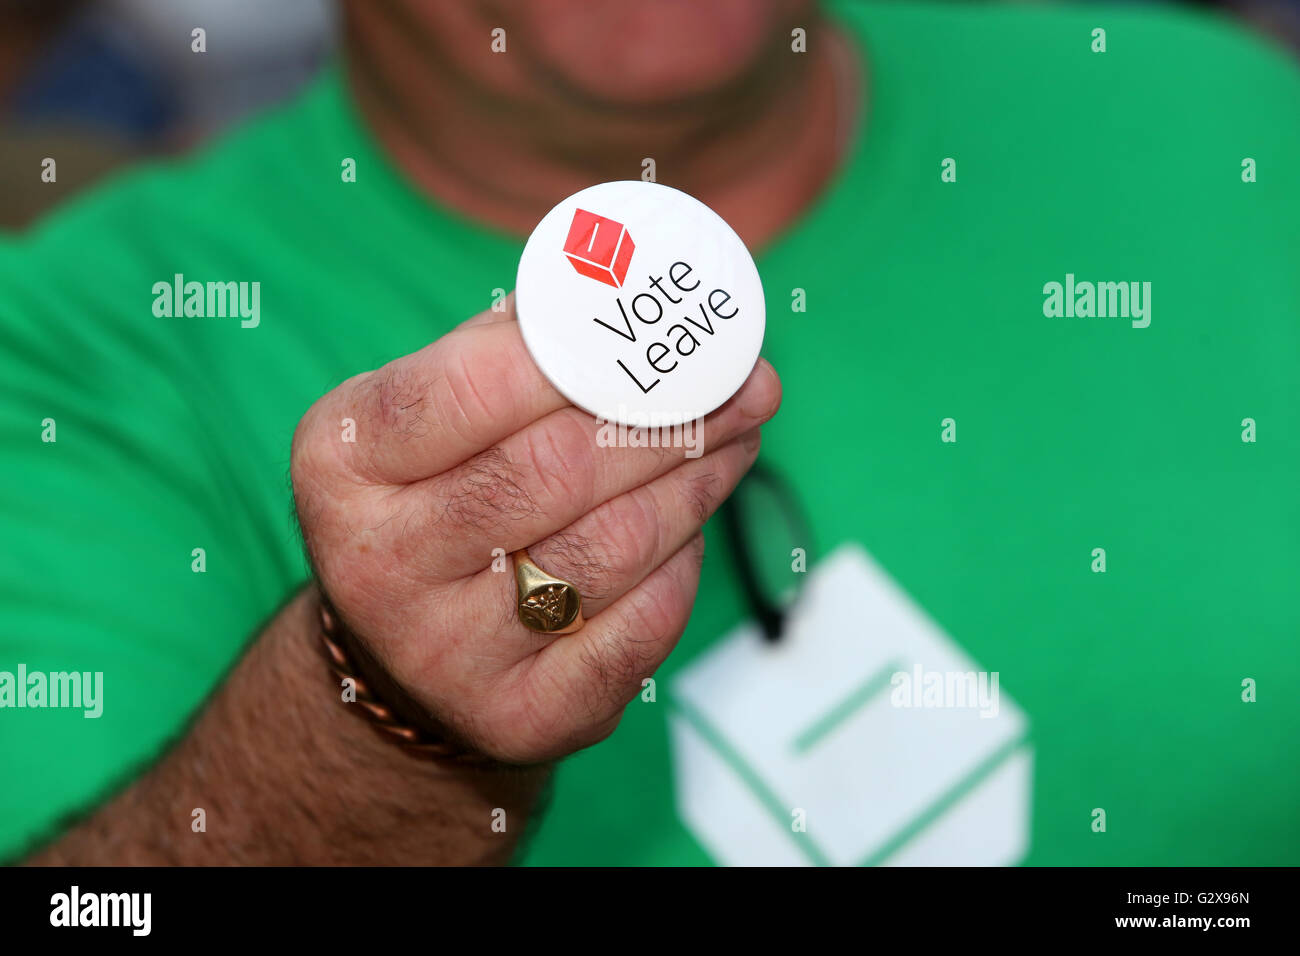 The UK's EU referendum: Local debate in Bognor Regis, West Sussex, UK. Pictured is detail of the Vote Leave badge. Stock Photo